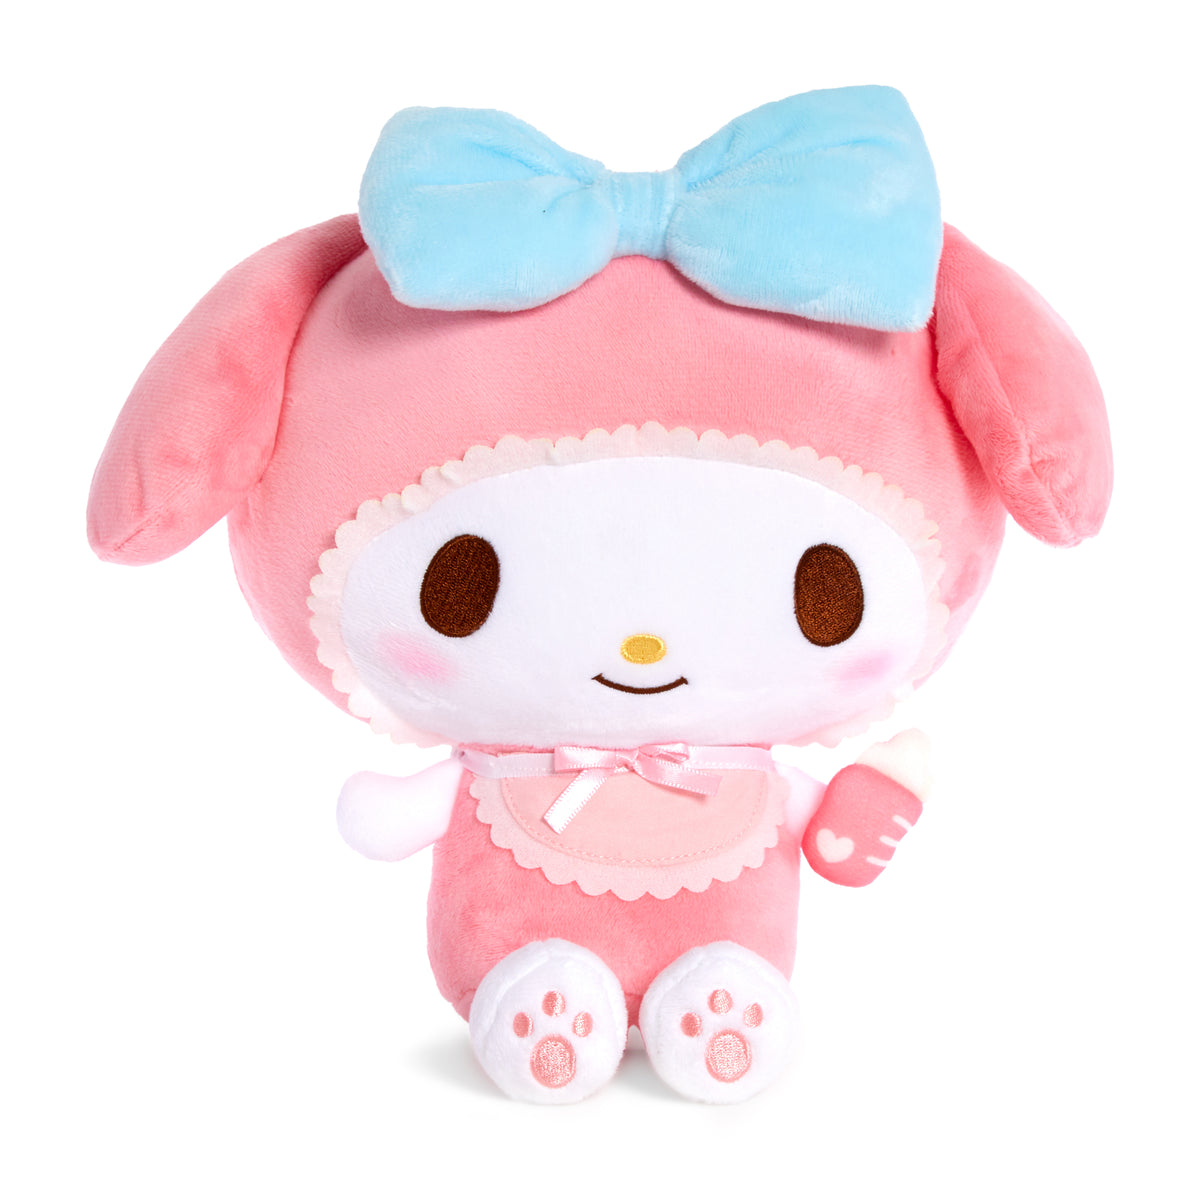 Sanrio Baby Hello Kitty Washable Plush